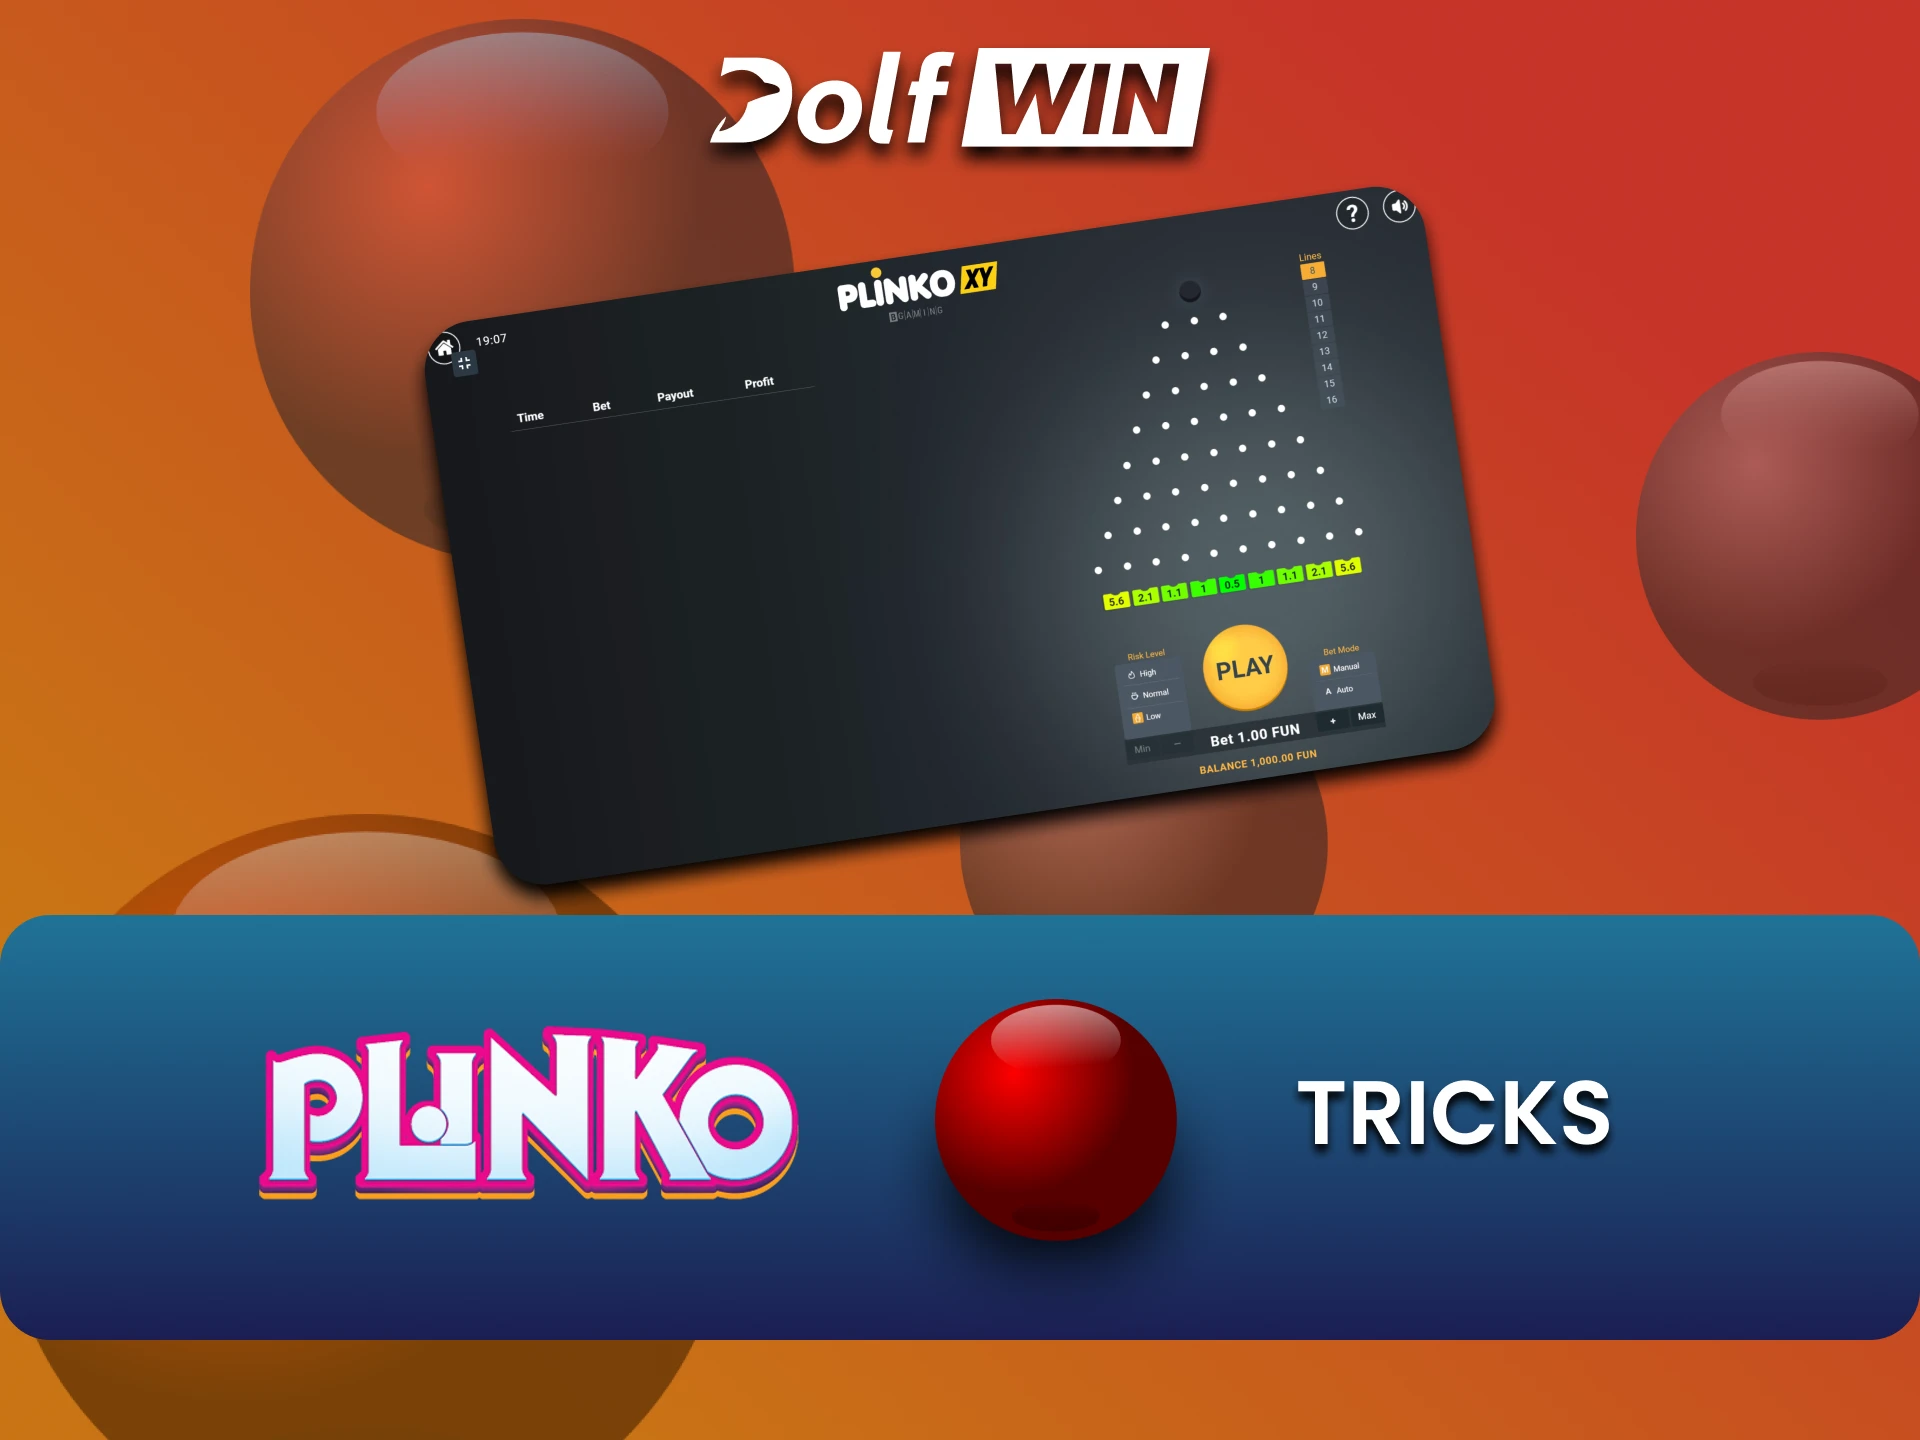 Learn tactics and tricks for Plinko on Dolfwin.